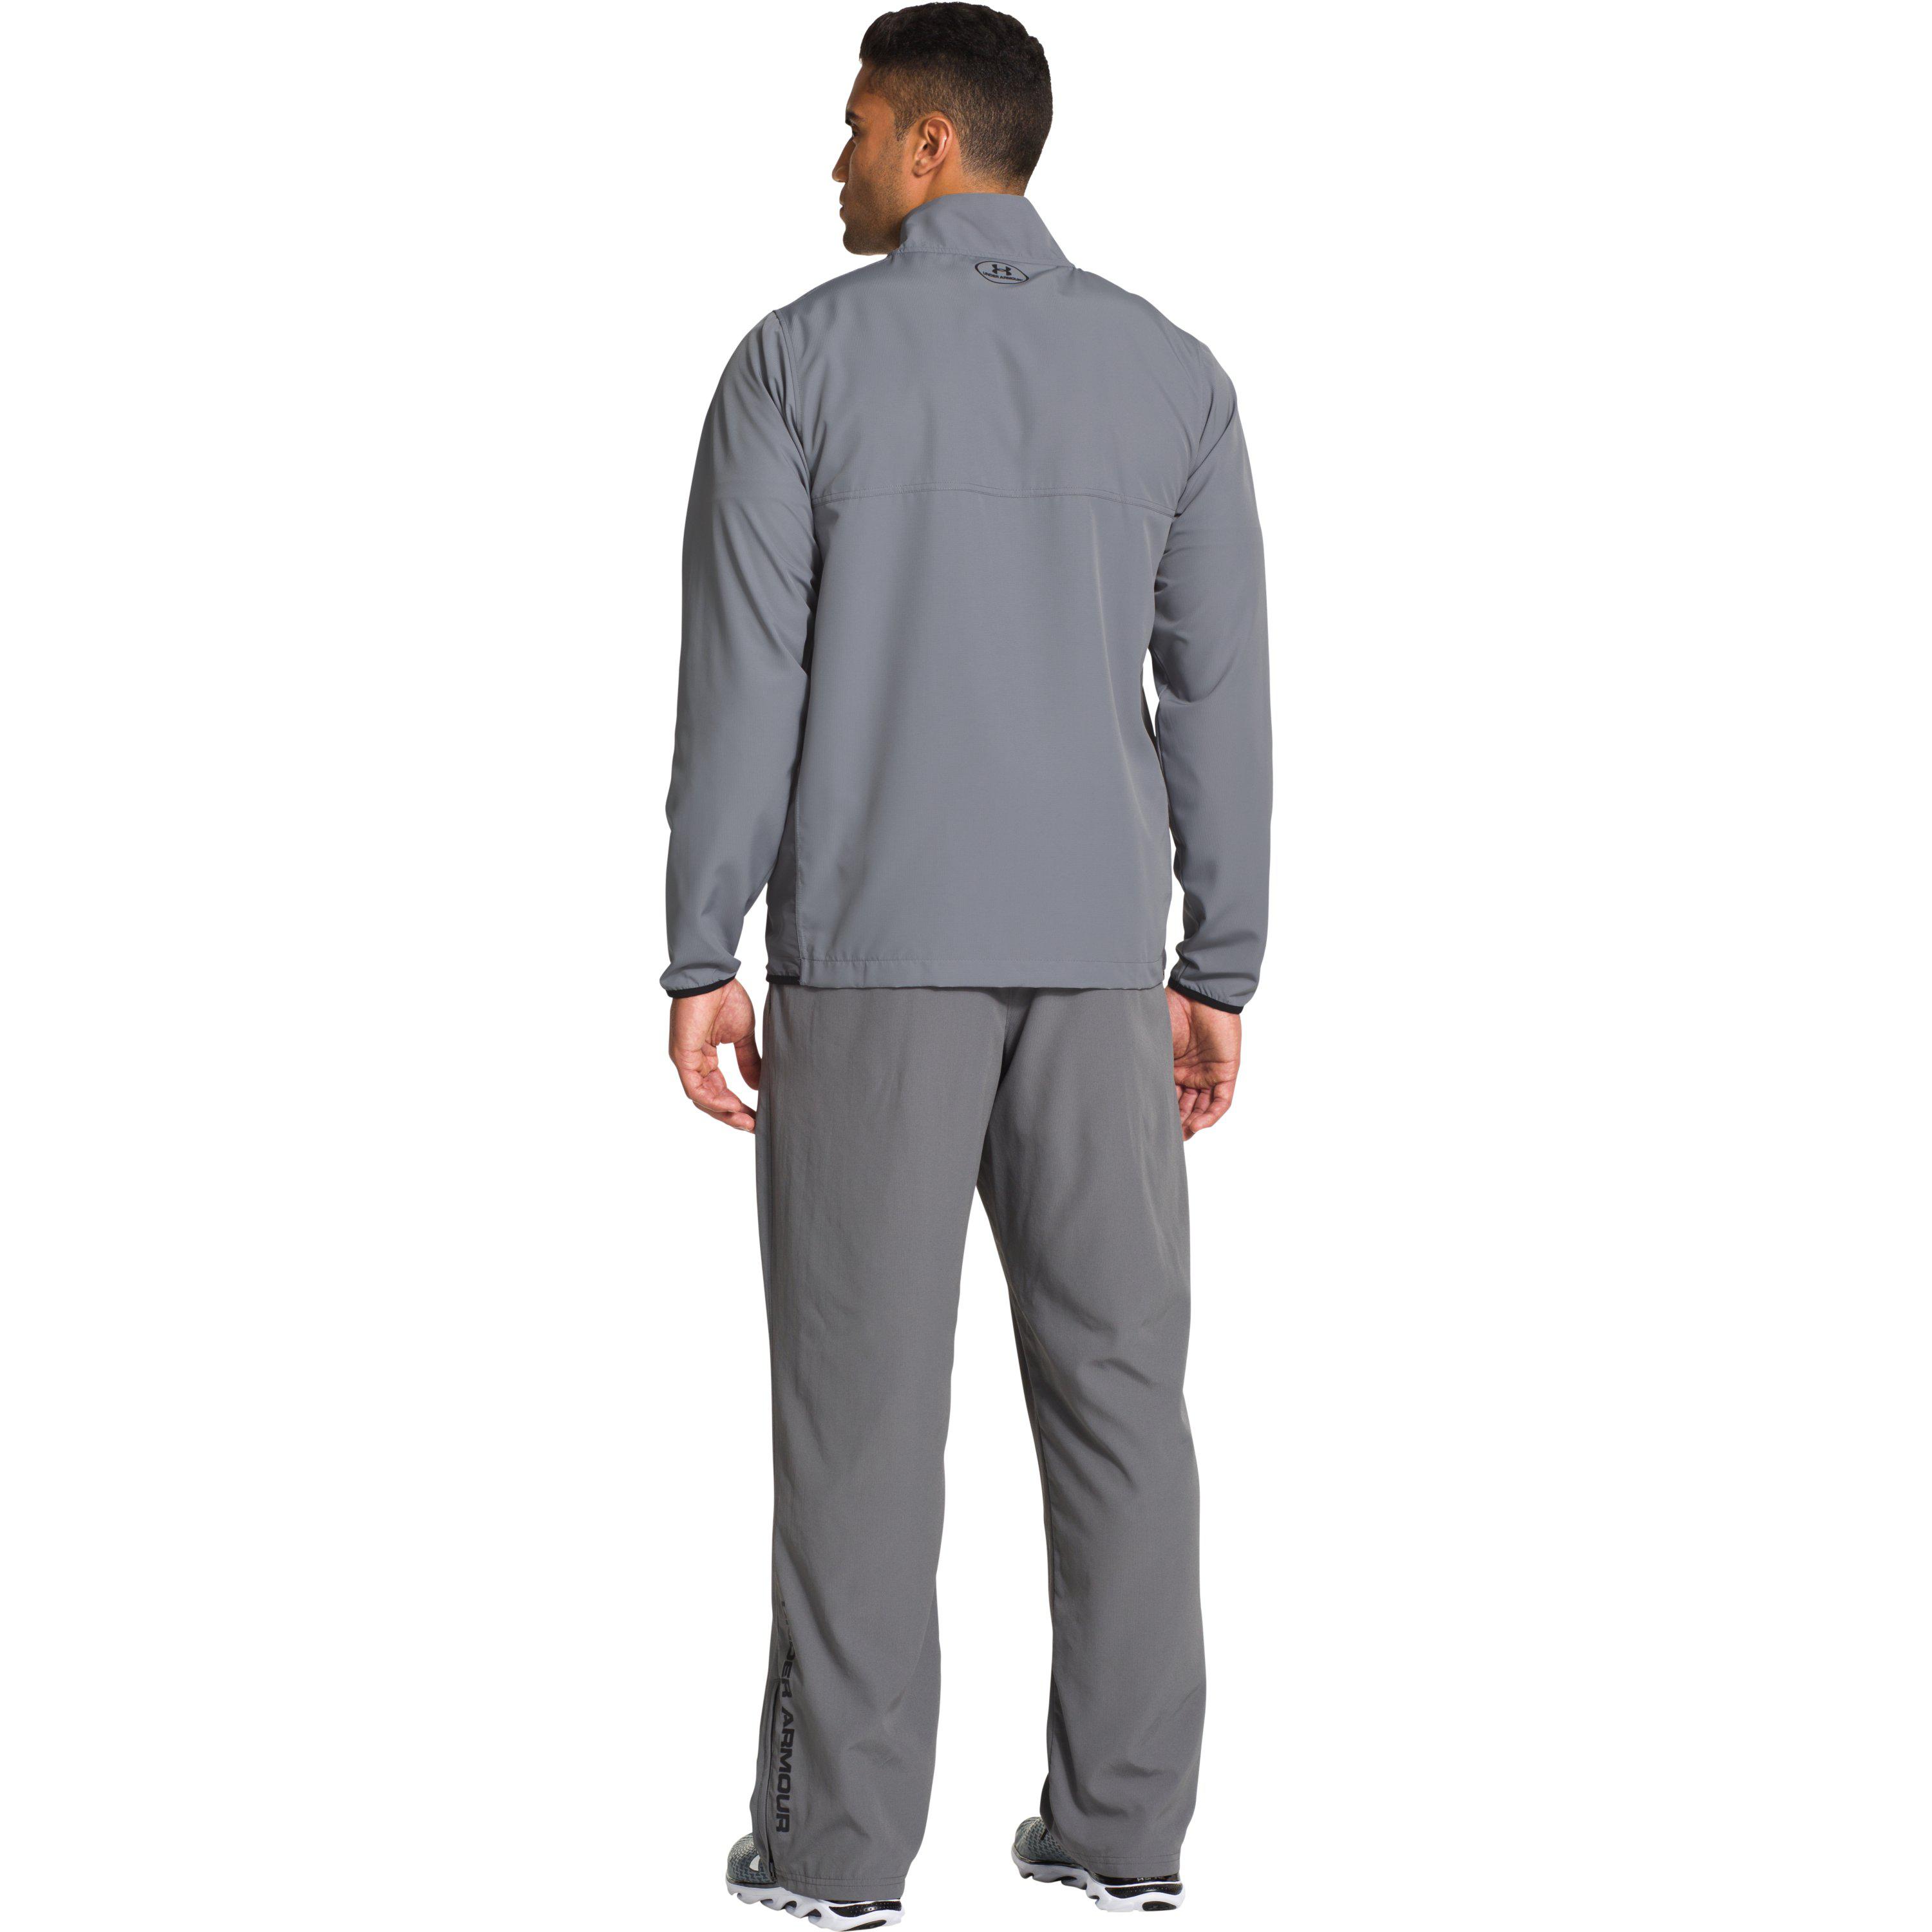 Vuk u ovce odjeća iluzija povezivanje  Under Armour Synthetic Men's Ua Vital Warm-up Jacket in Steel/Graphite  (Gray) for Men - Lyst